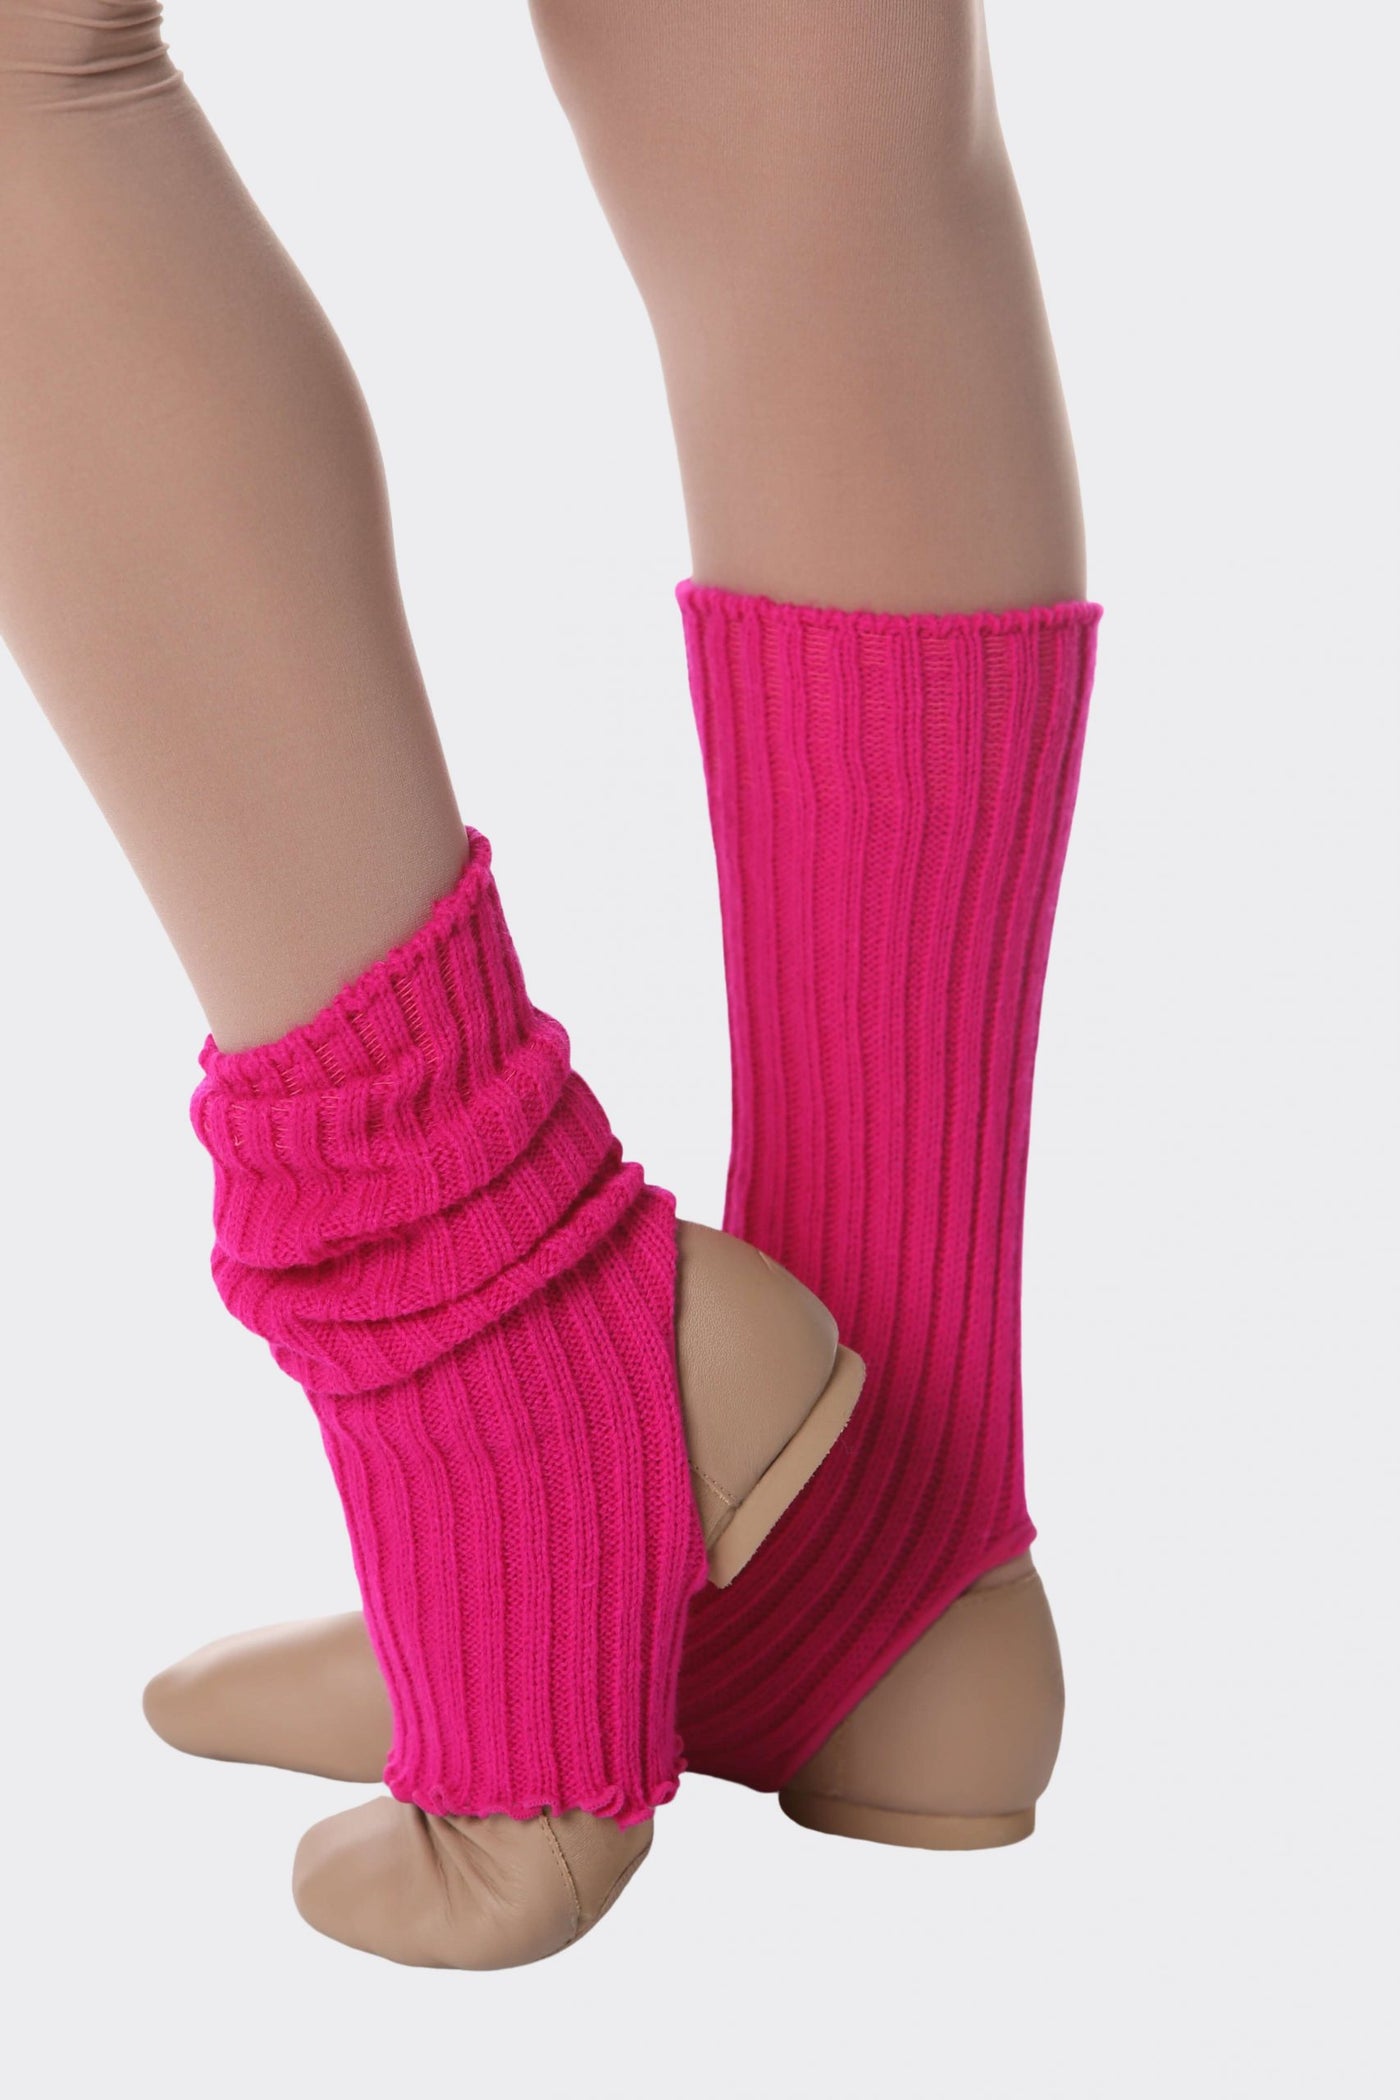 Studio 7 Child Ankle Leg warmers (35cm) ACLW03